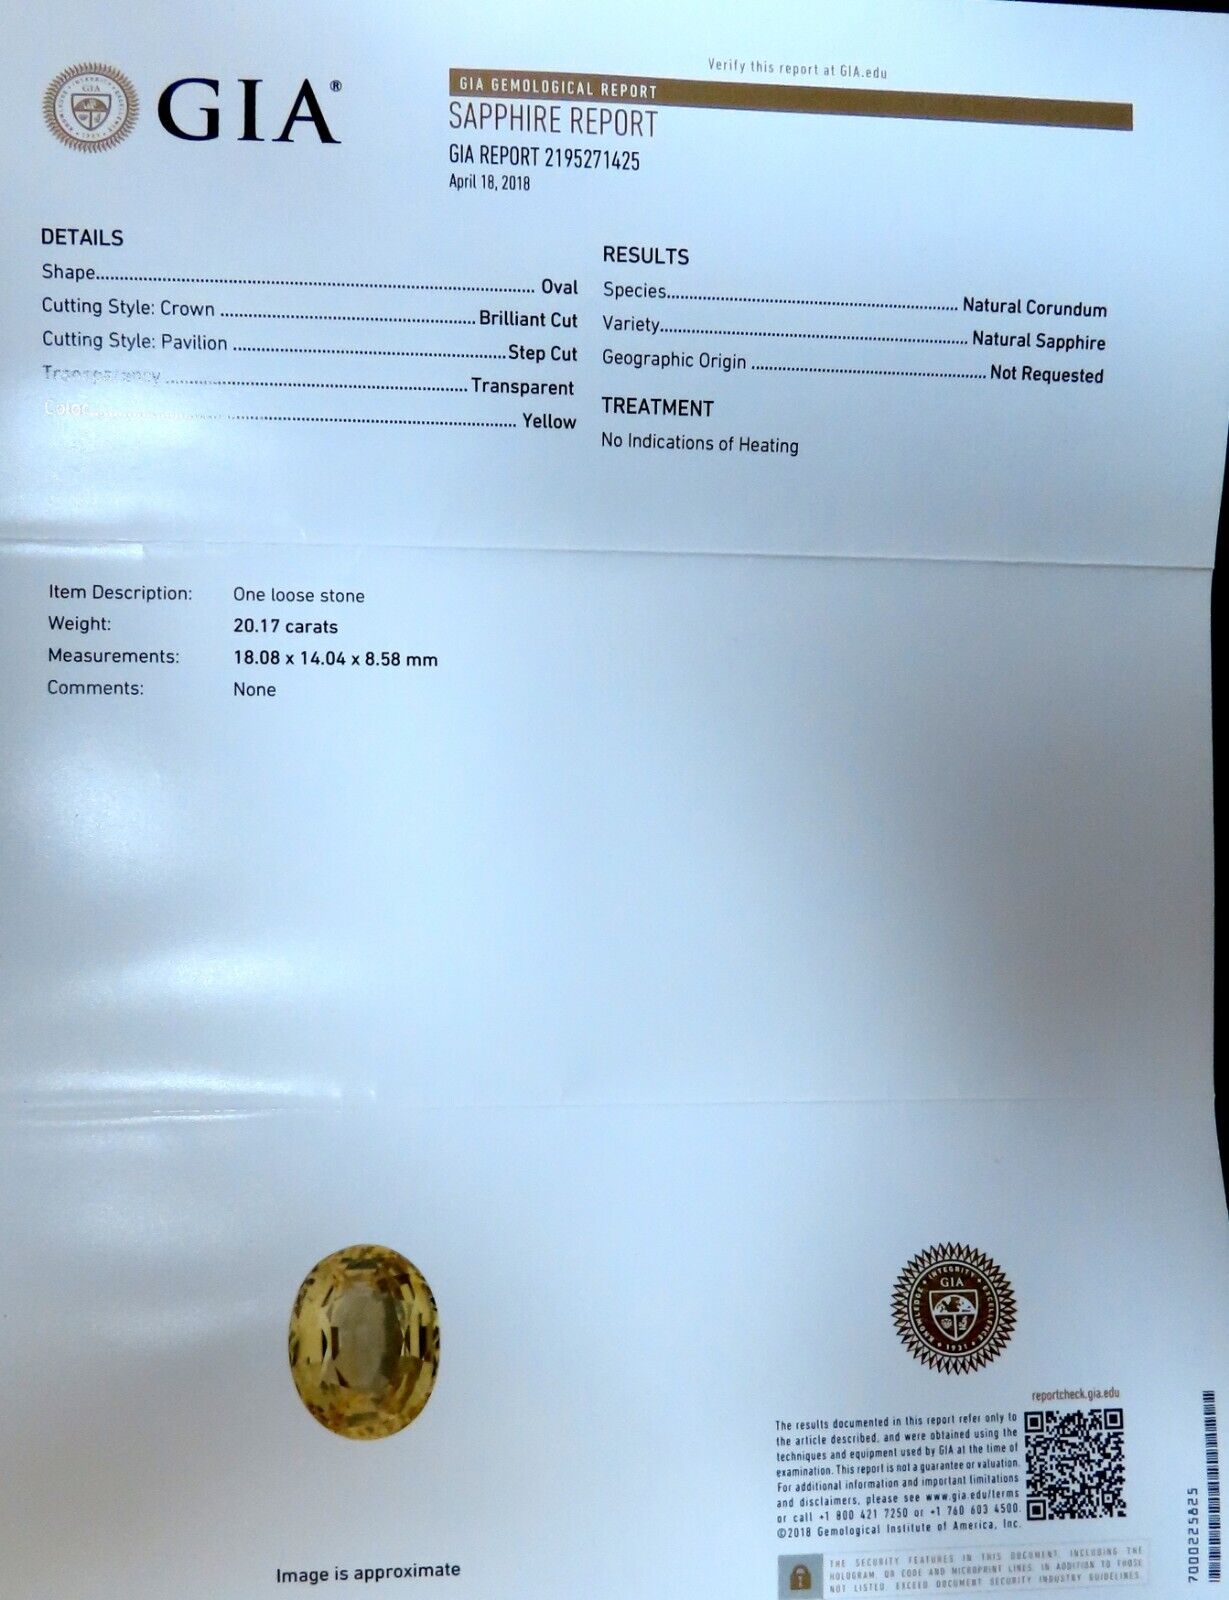 20.17ct GIA Certified Natural No Heat Yellow Sapphire diamonds ring 18kt